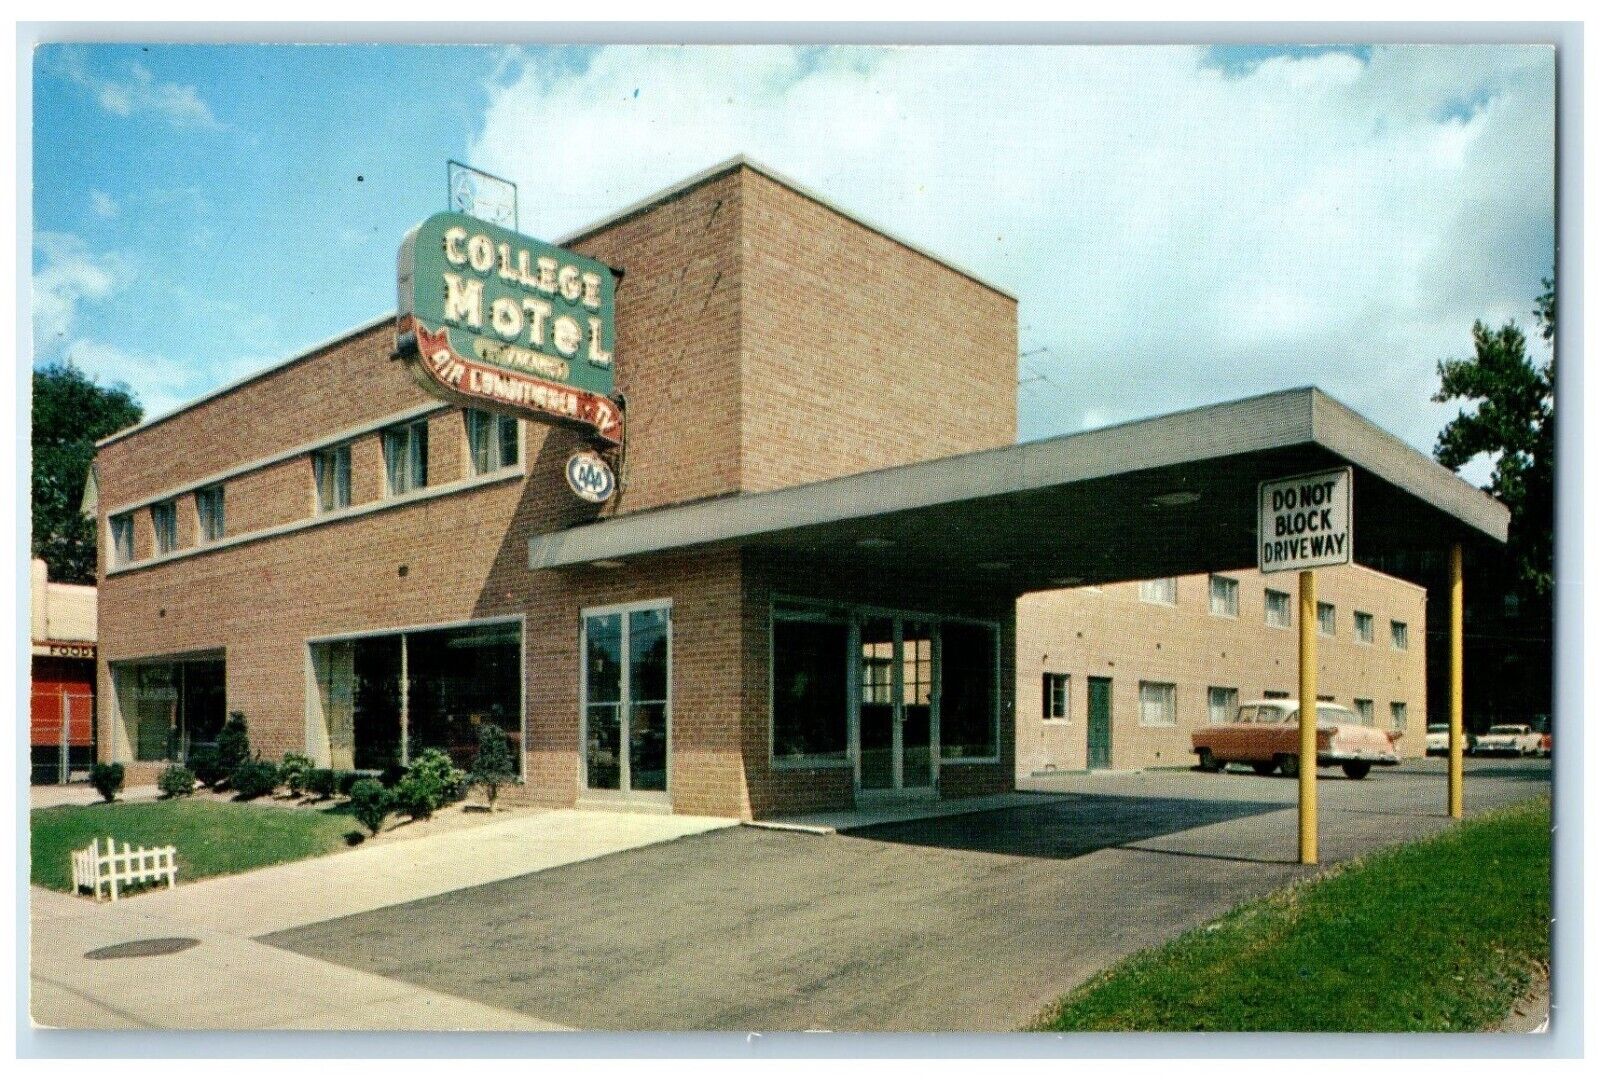 c1960 College Motel Euclid Avenue Exterior Building Cleveland Ohio OH Postcard